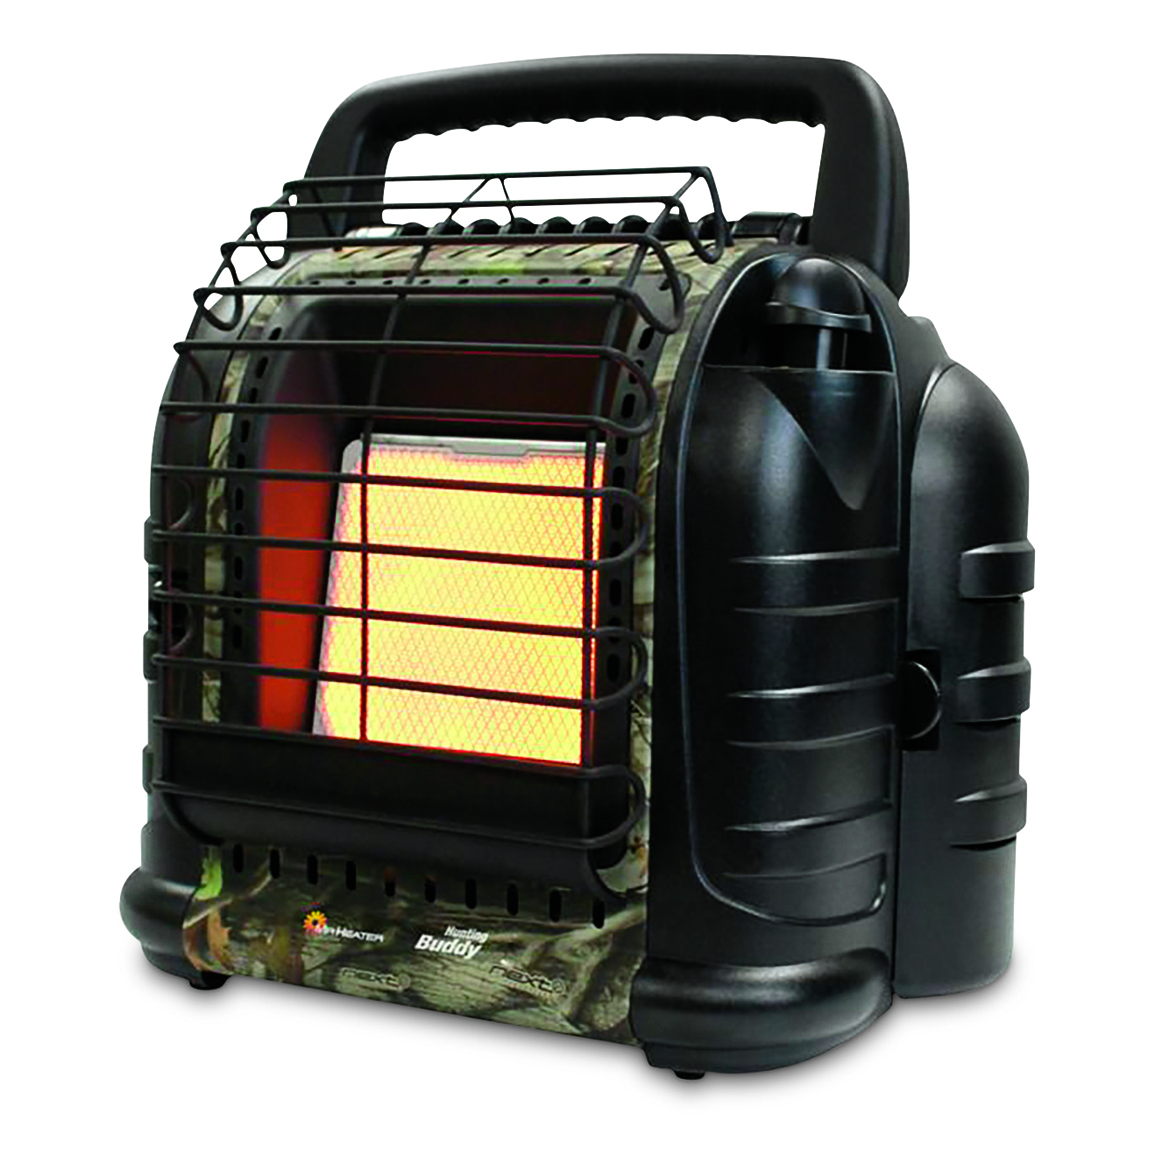 Mr. Heater Reconditioned Hunting Buddy Portable Propane Heater, 12,000 BTU